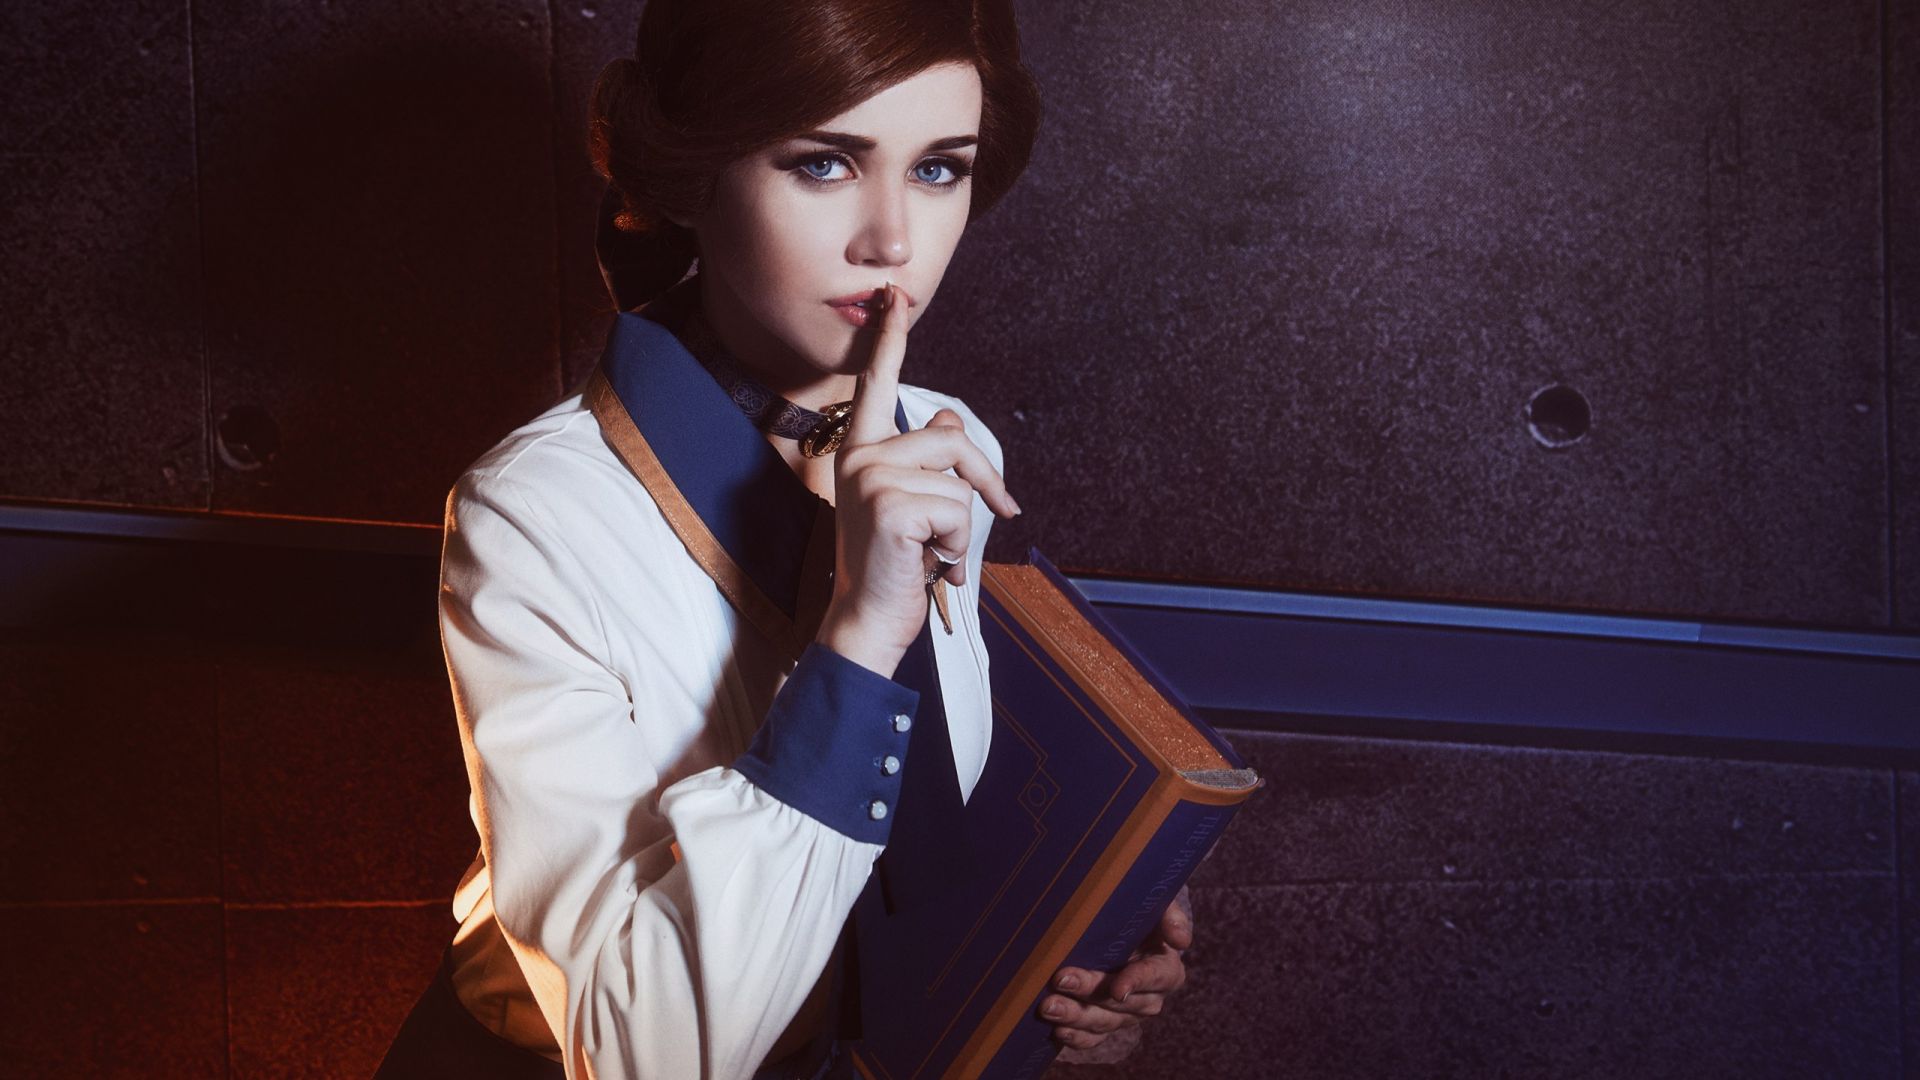 Wallpaper Bioshock Infinite, Elizabeth, cosplay, book, model